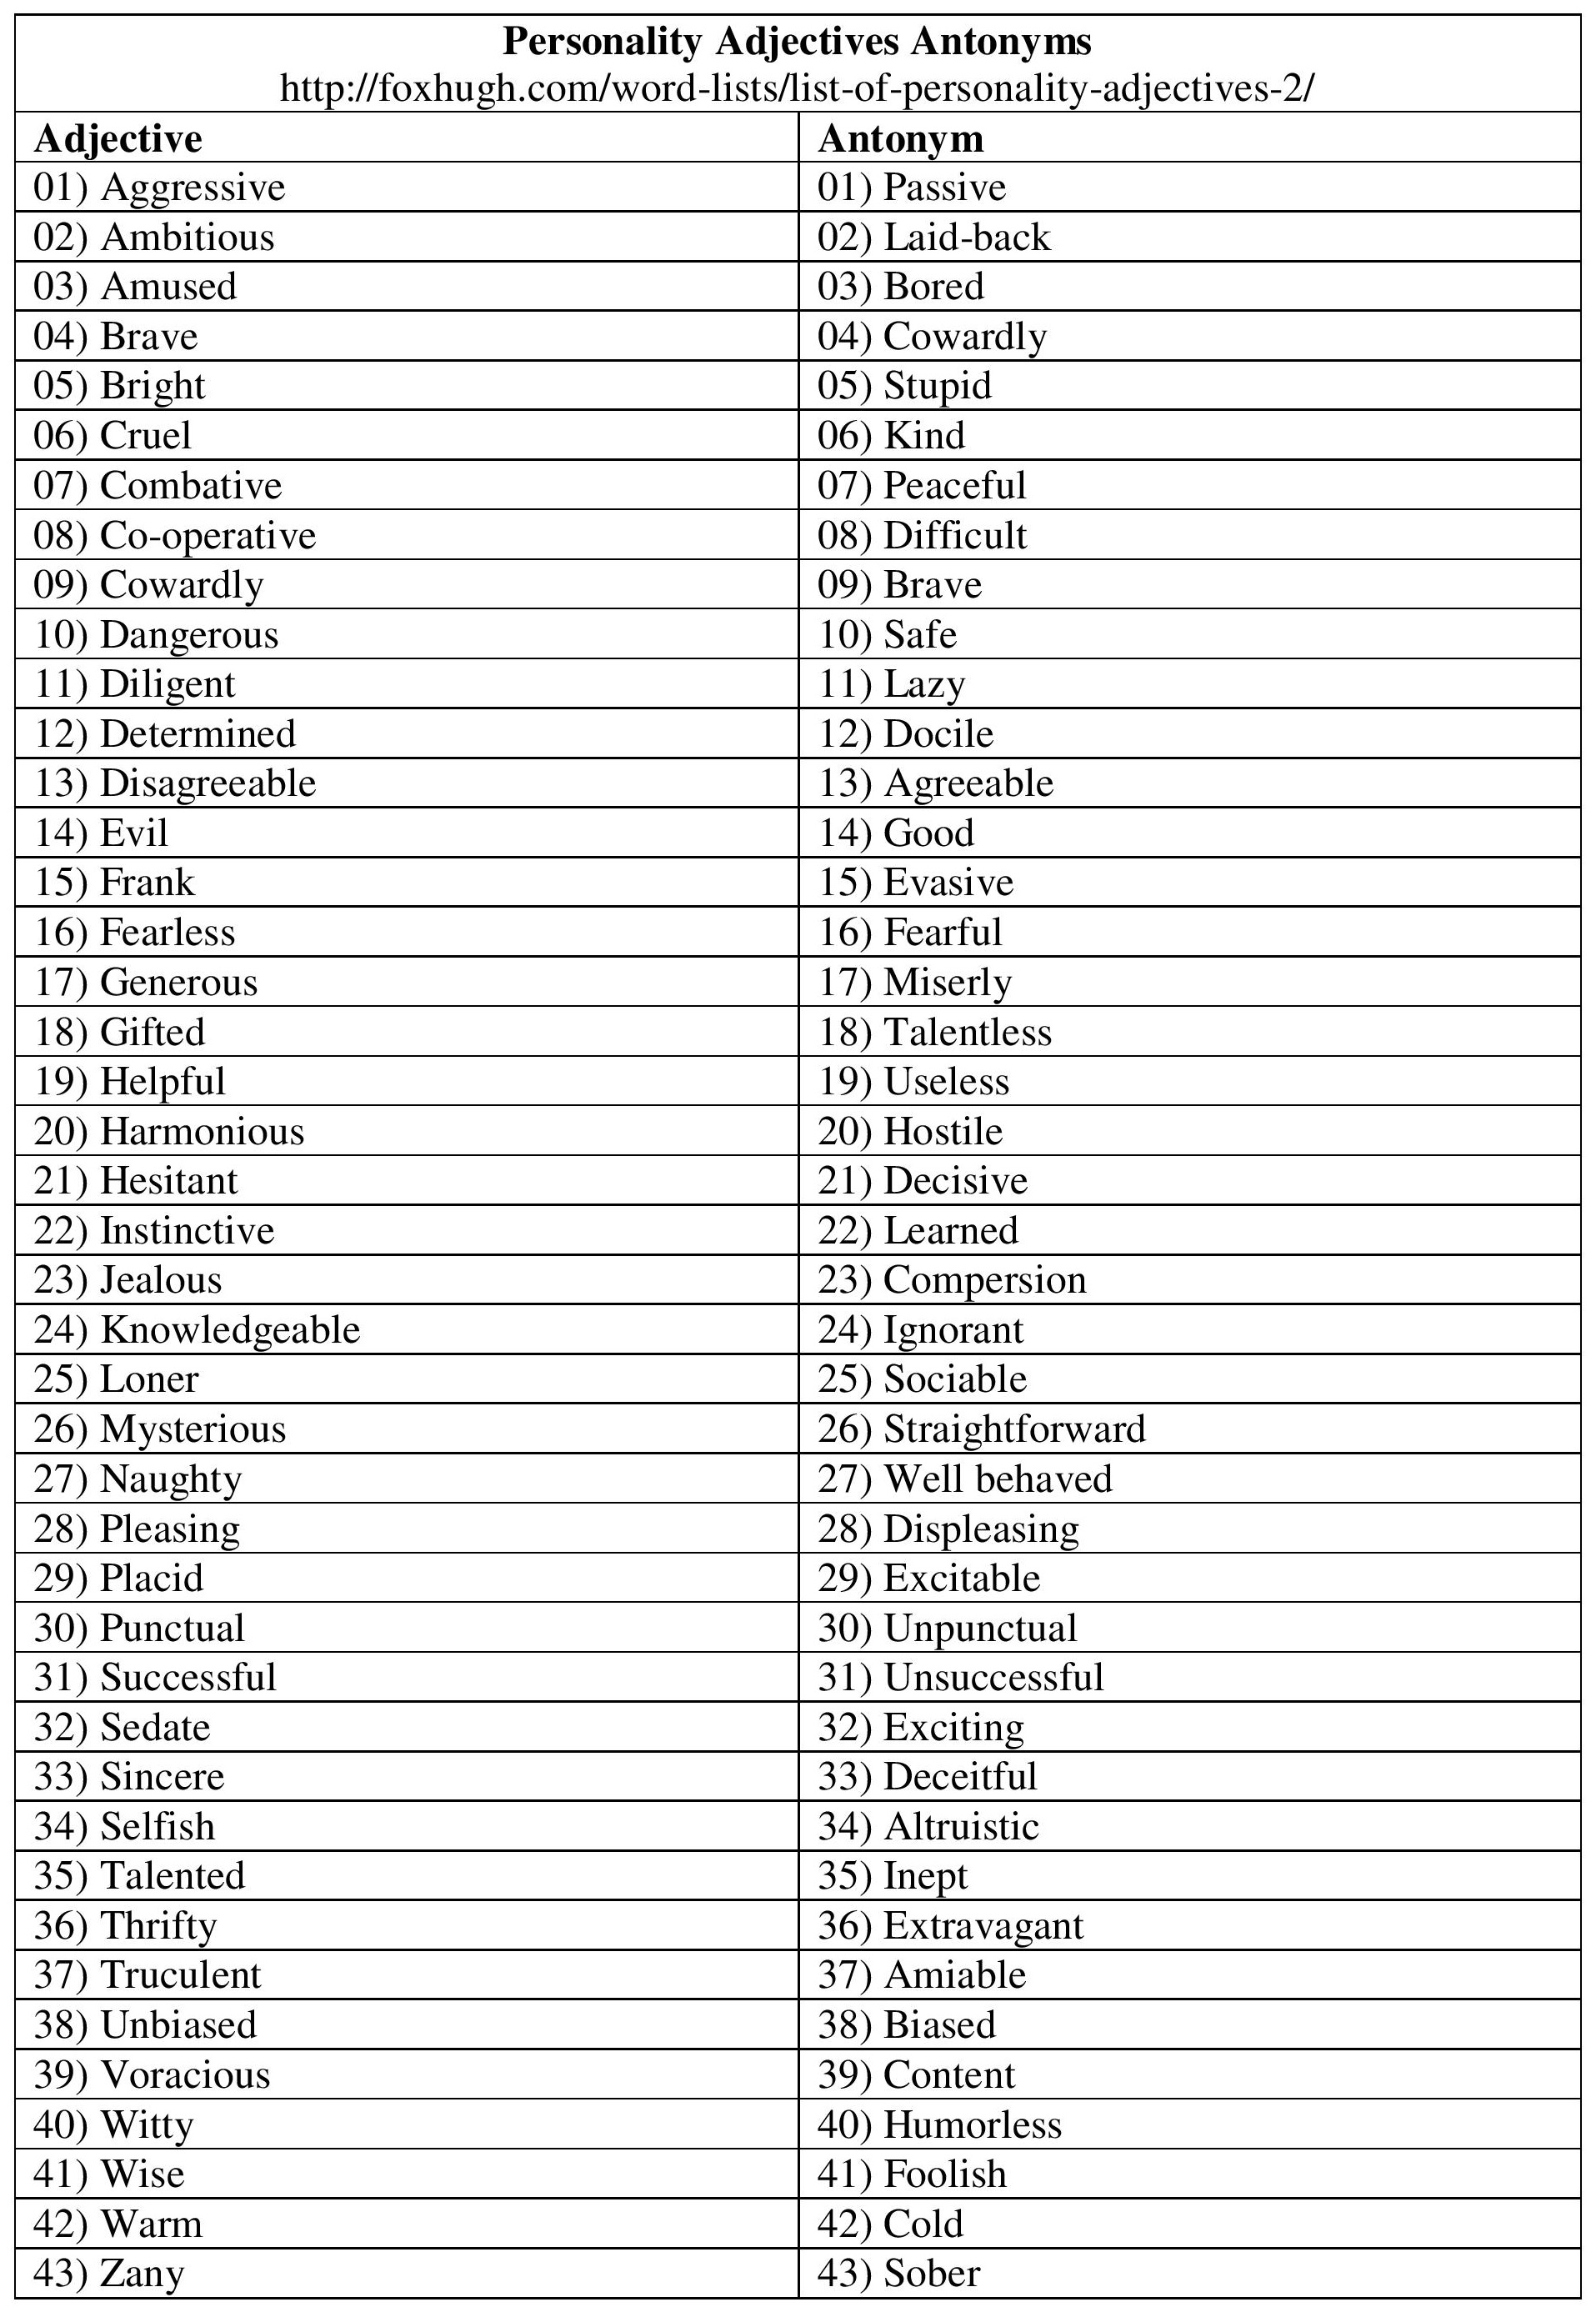 Personality Adjectives Antonym Table